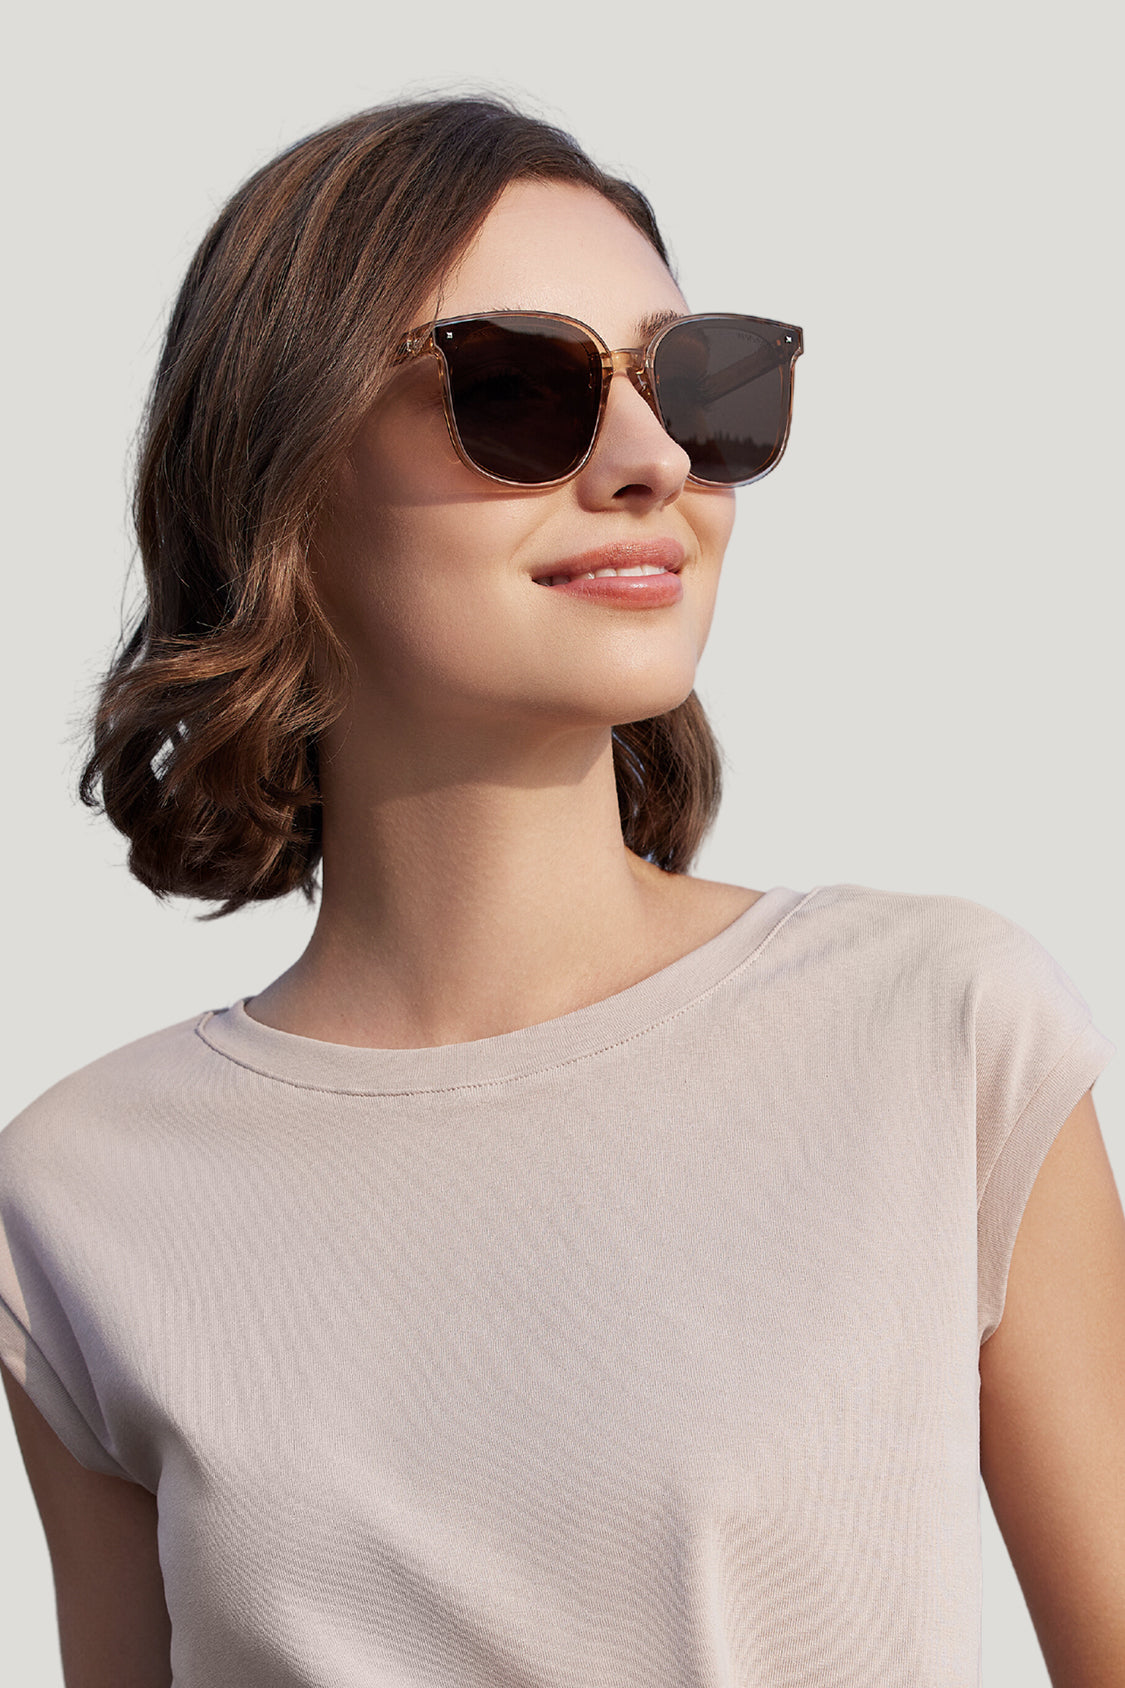 beneunder wild polarized folding sunglasses shades for women men #color_brown